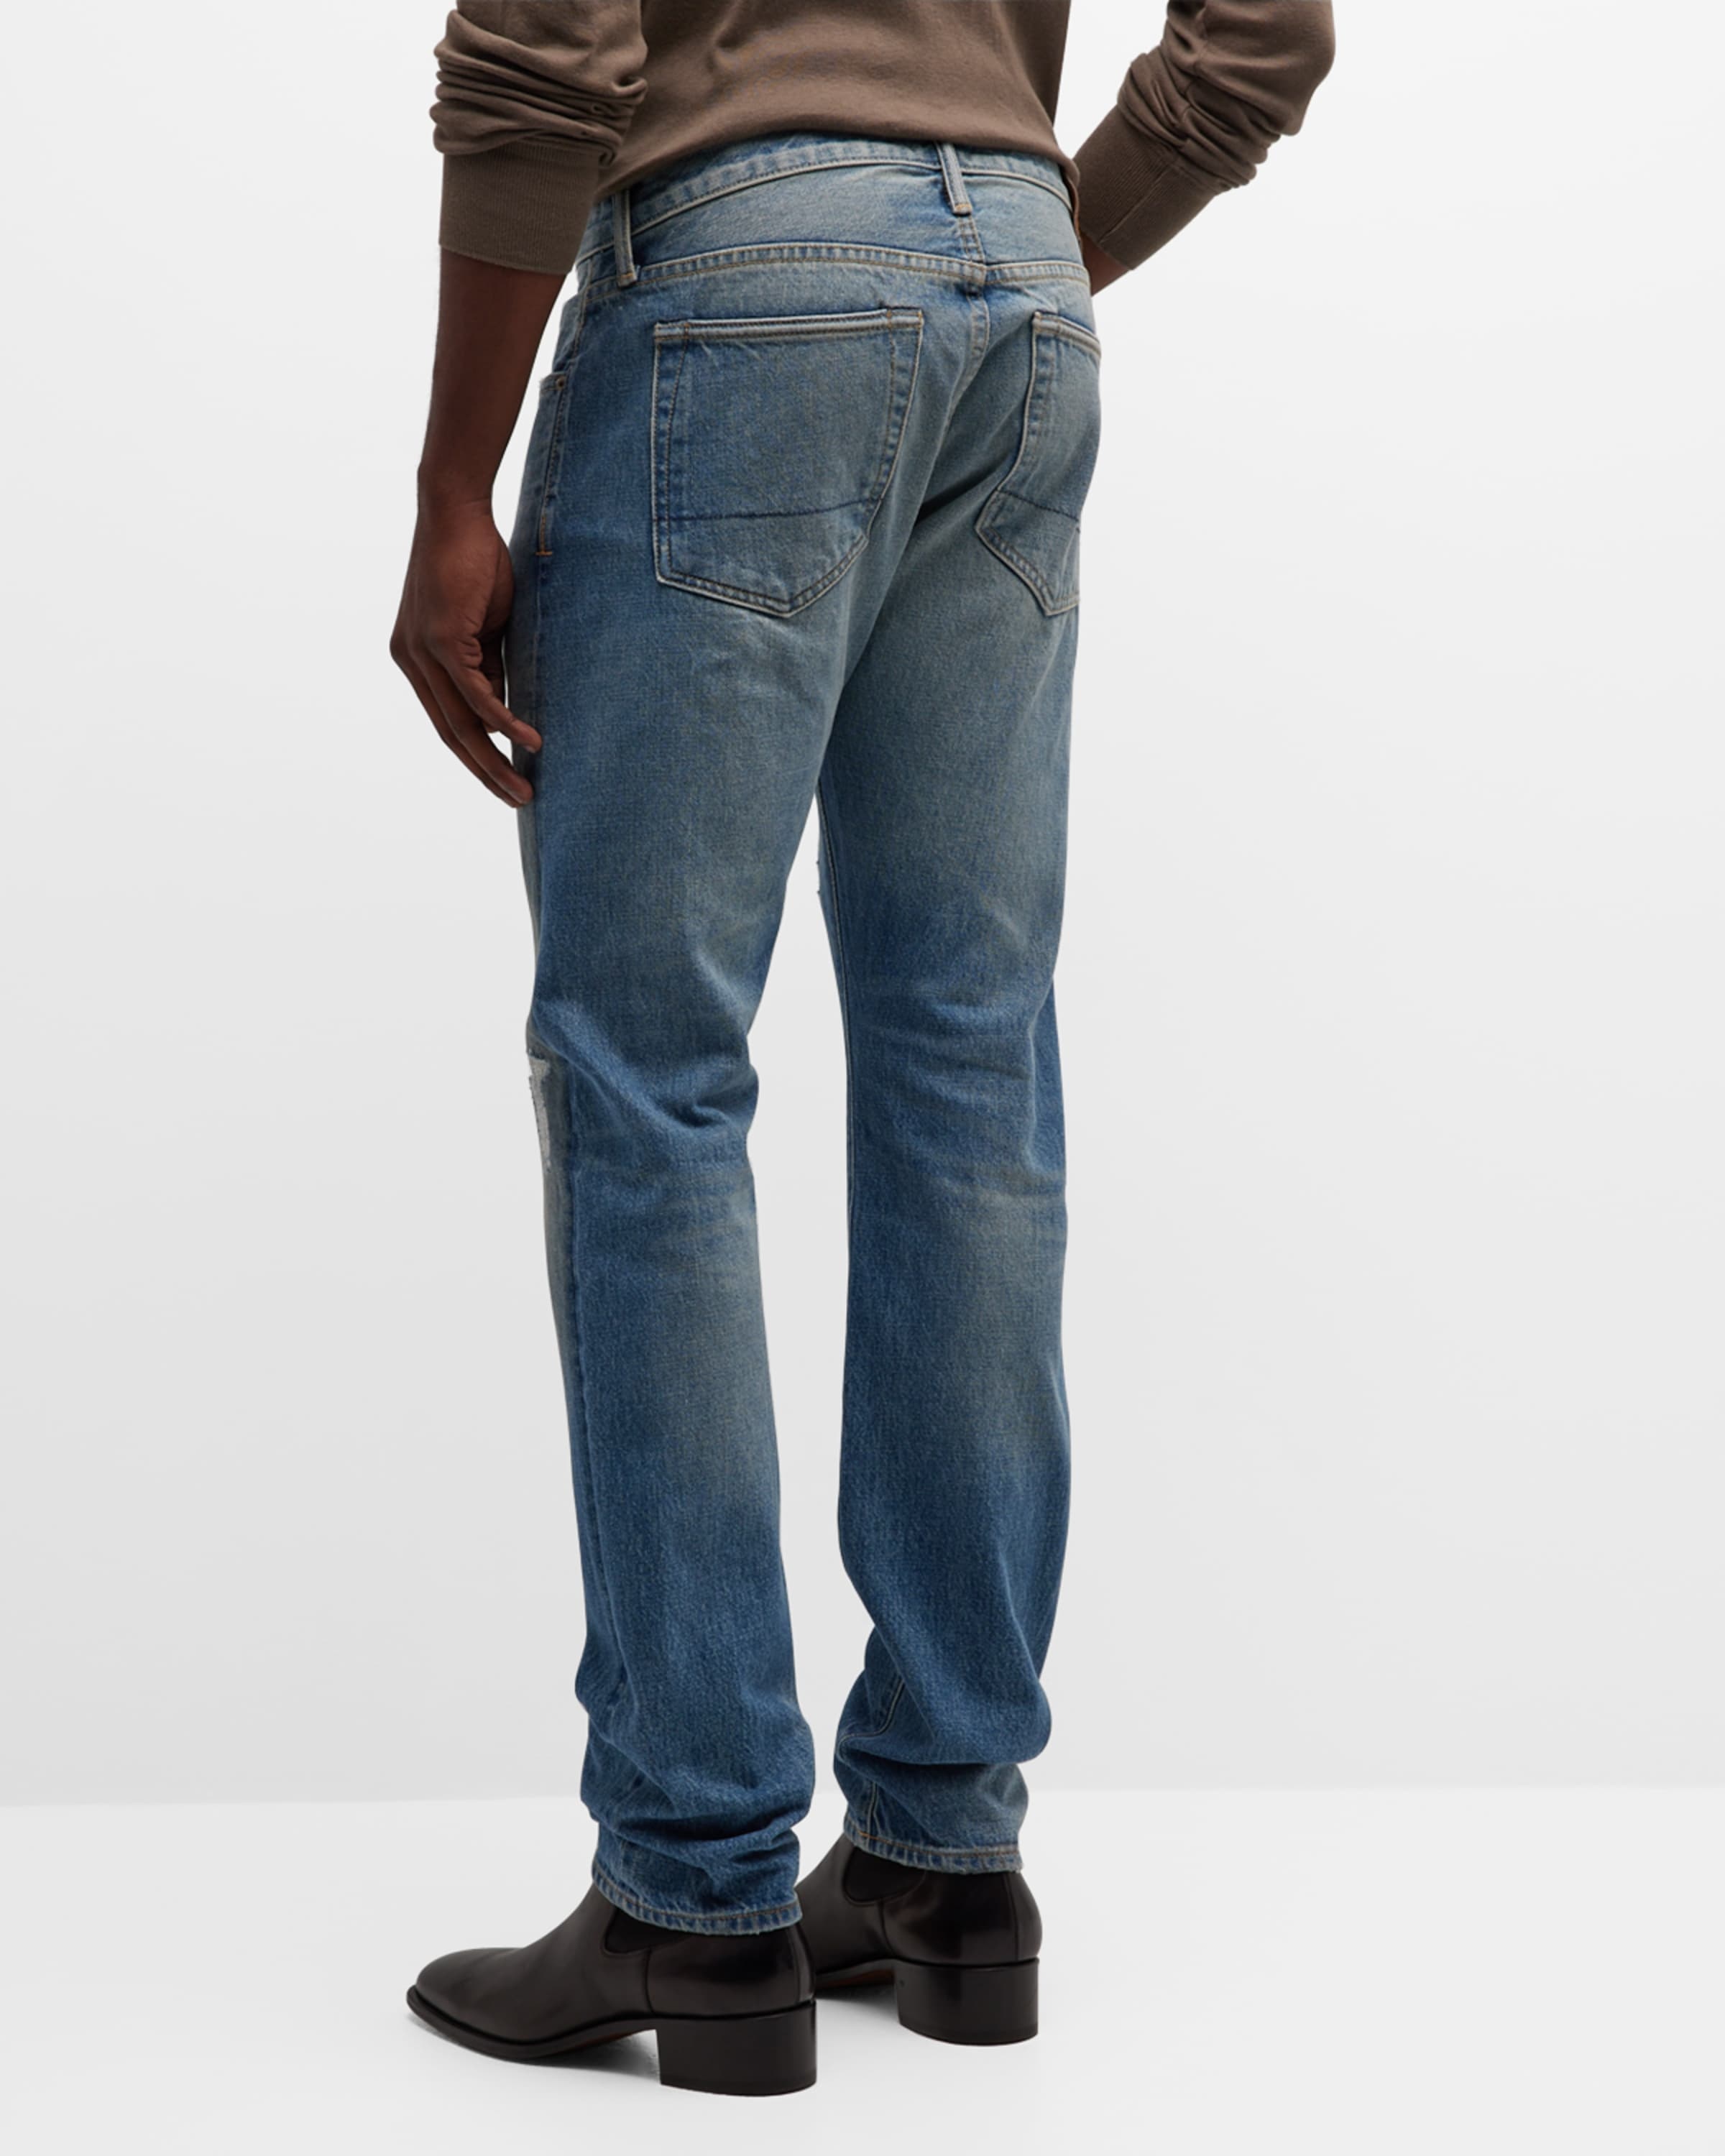 Men's Slim Fit Distressed Jeans - 4